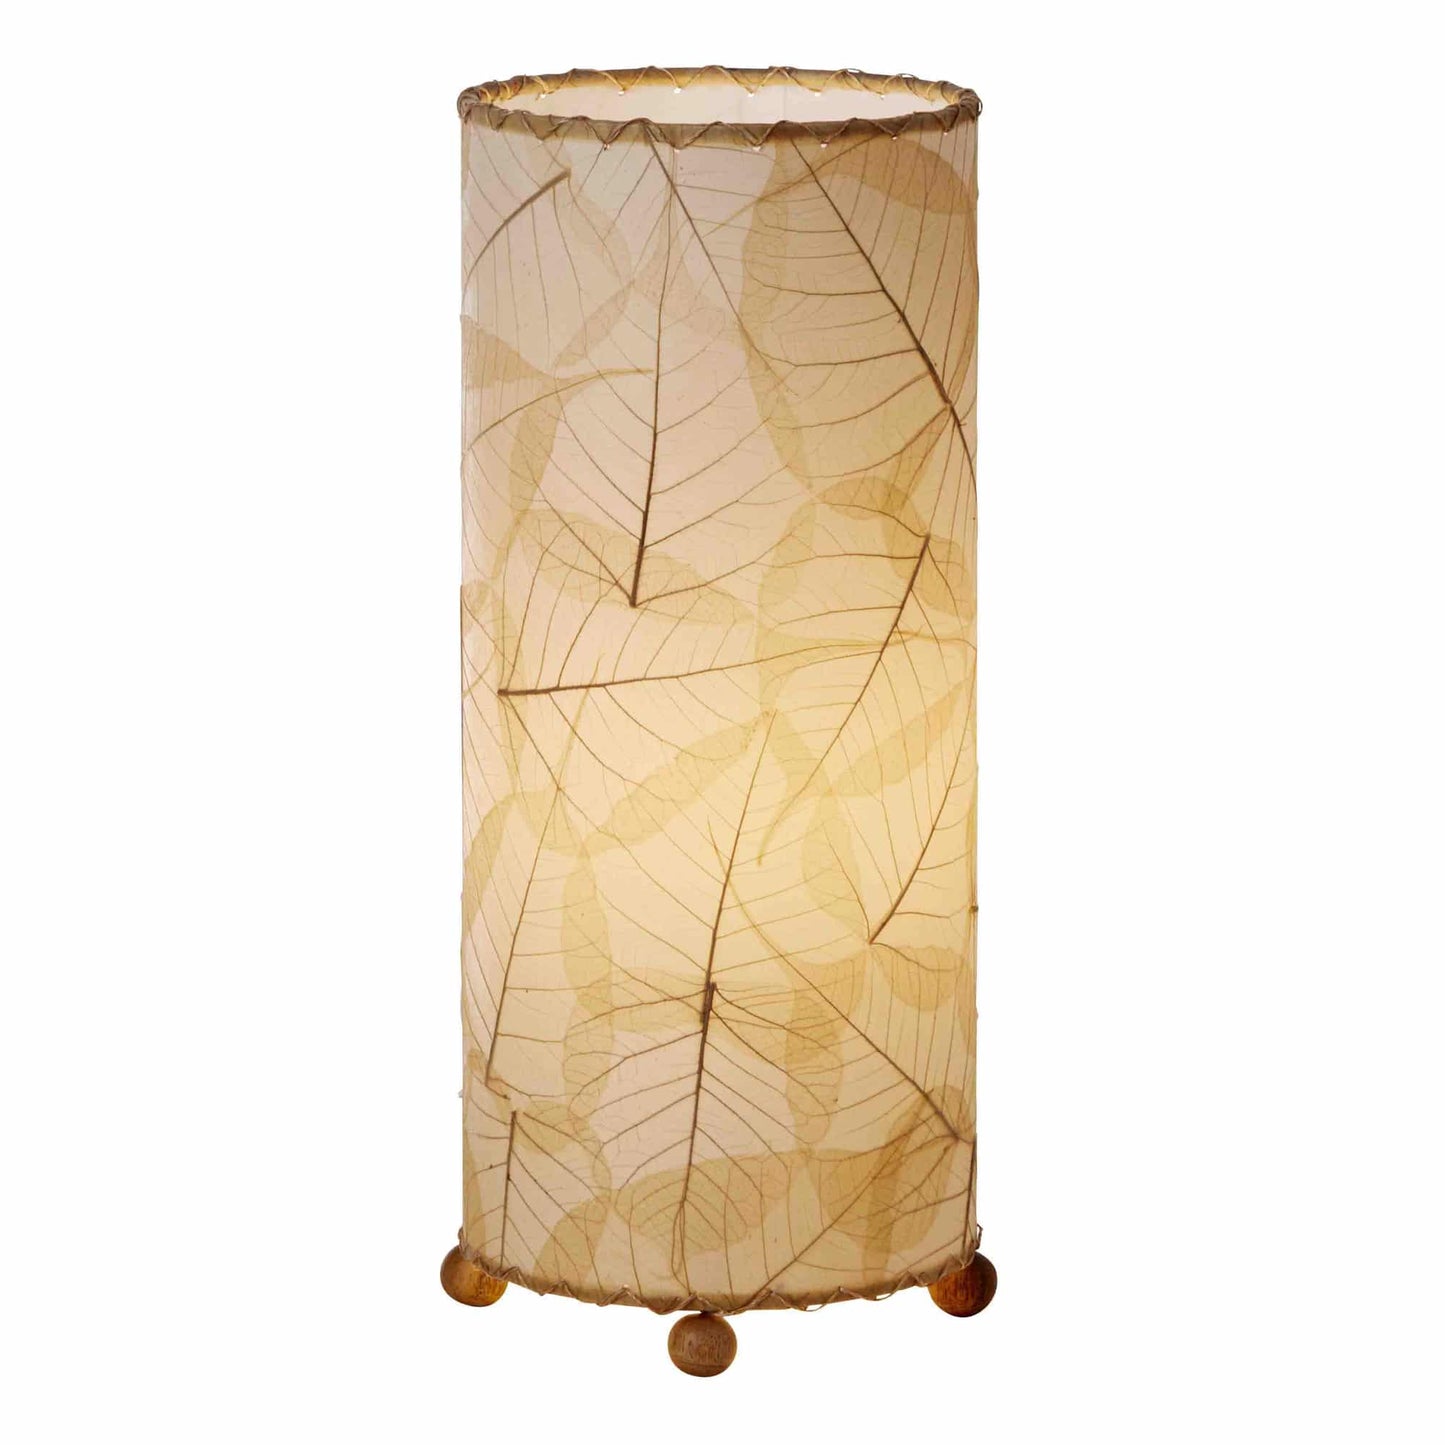 Banyan Table Lamp